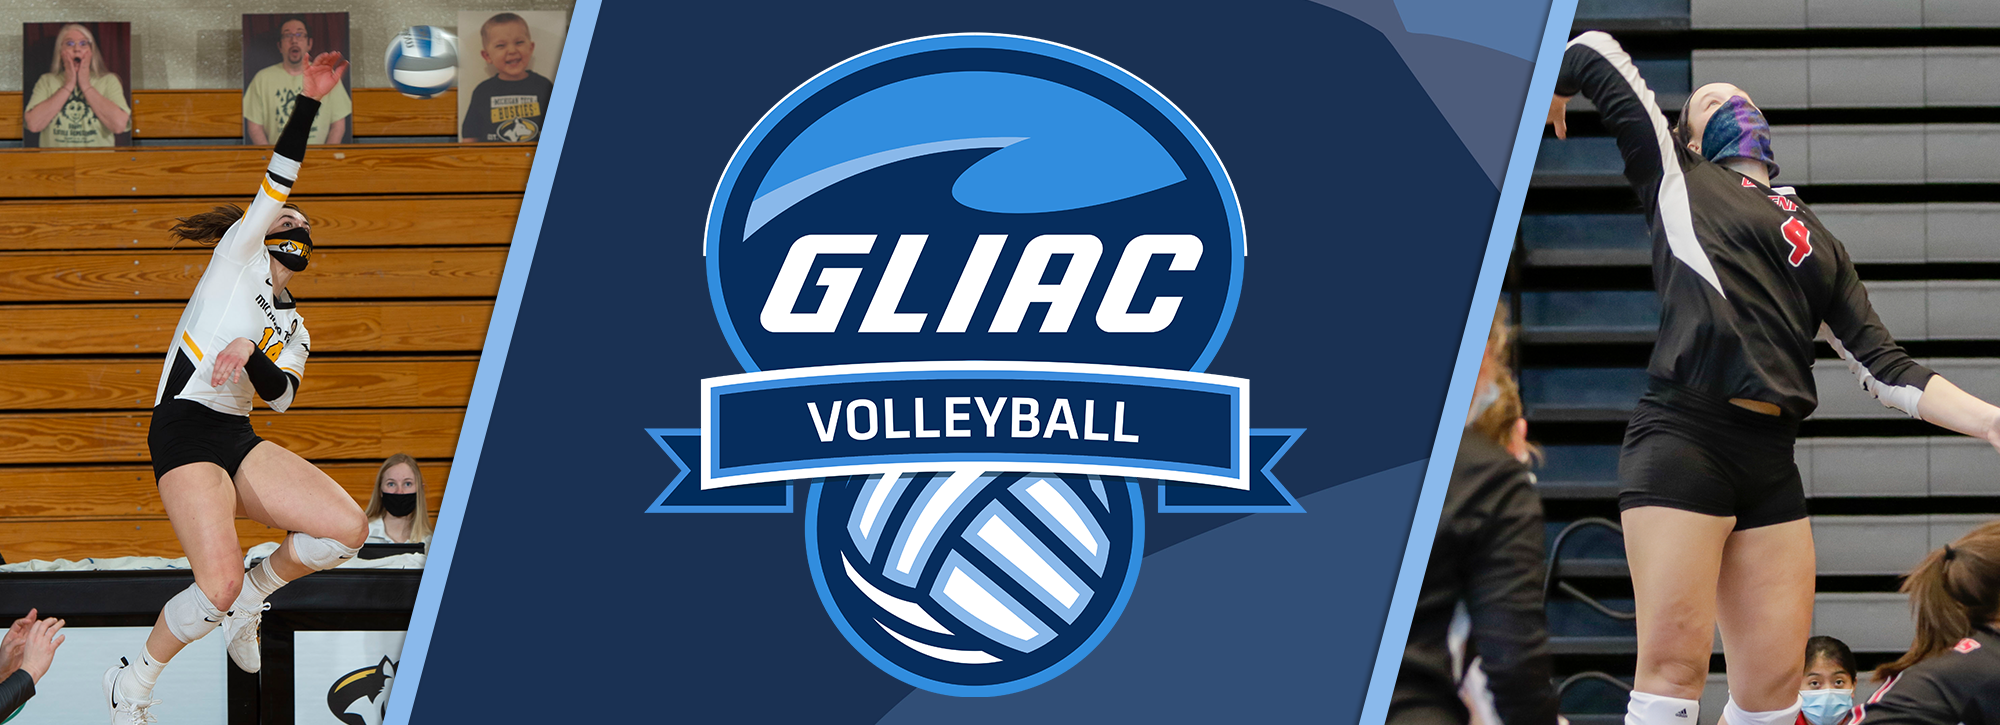 MTU's Ghormley, DU's Kreiger Claim GLIAC Volleyball Players of the Week